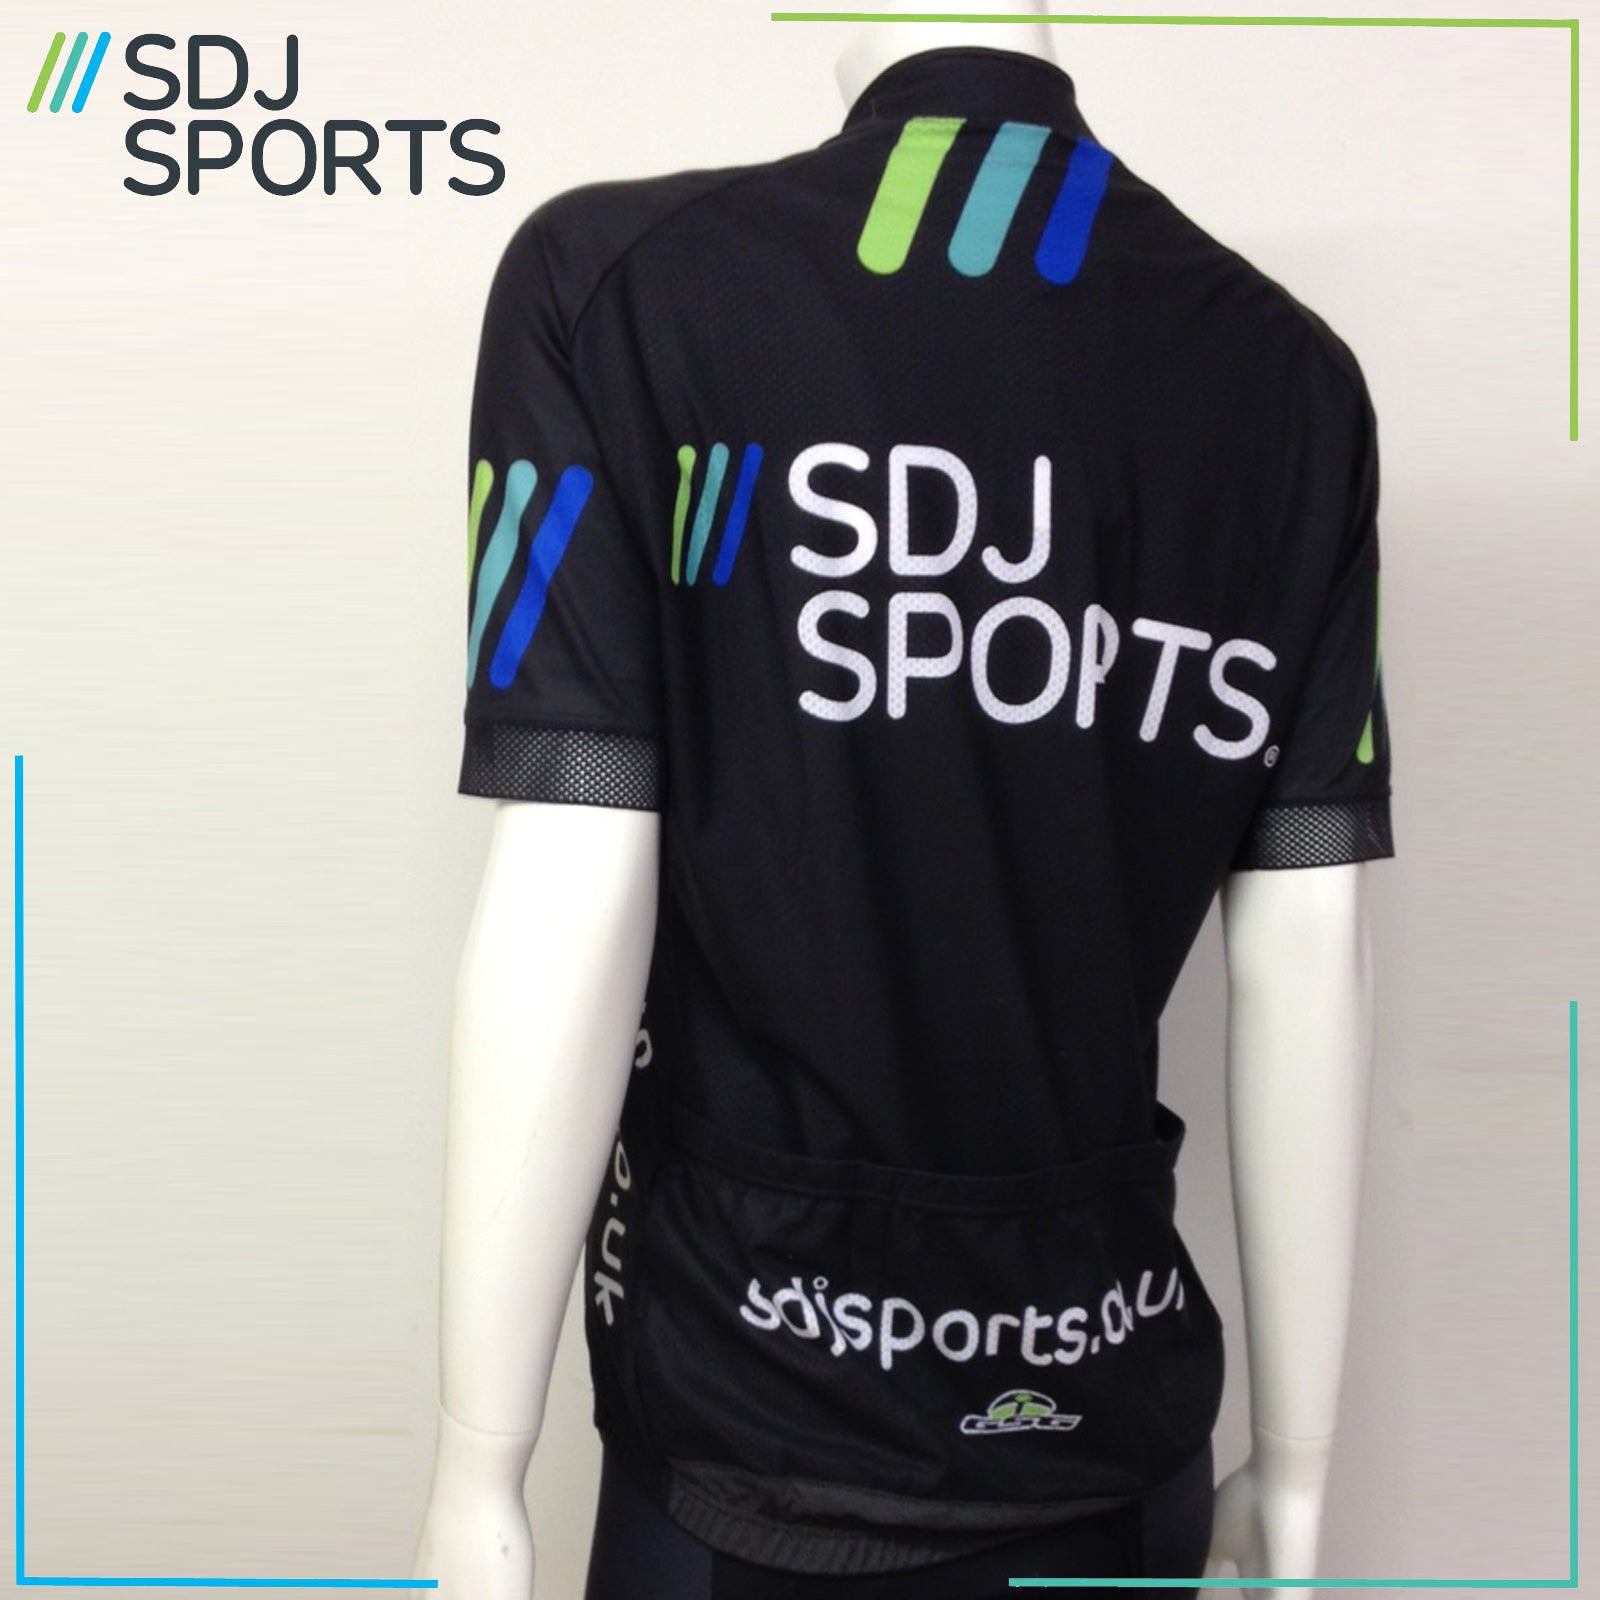 SDJ Sports Team X Large Men's Short Sleeve Cycling Jersey Alternate 1